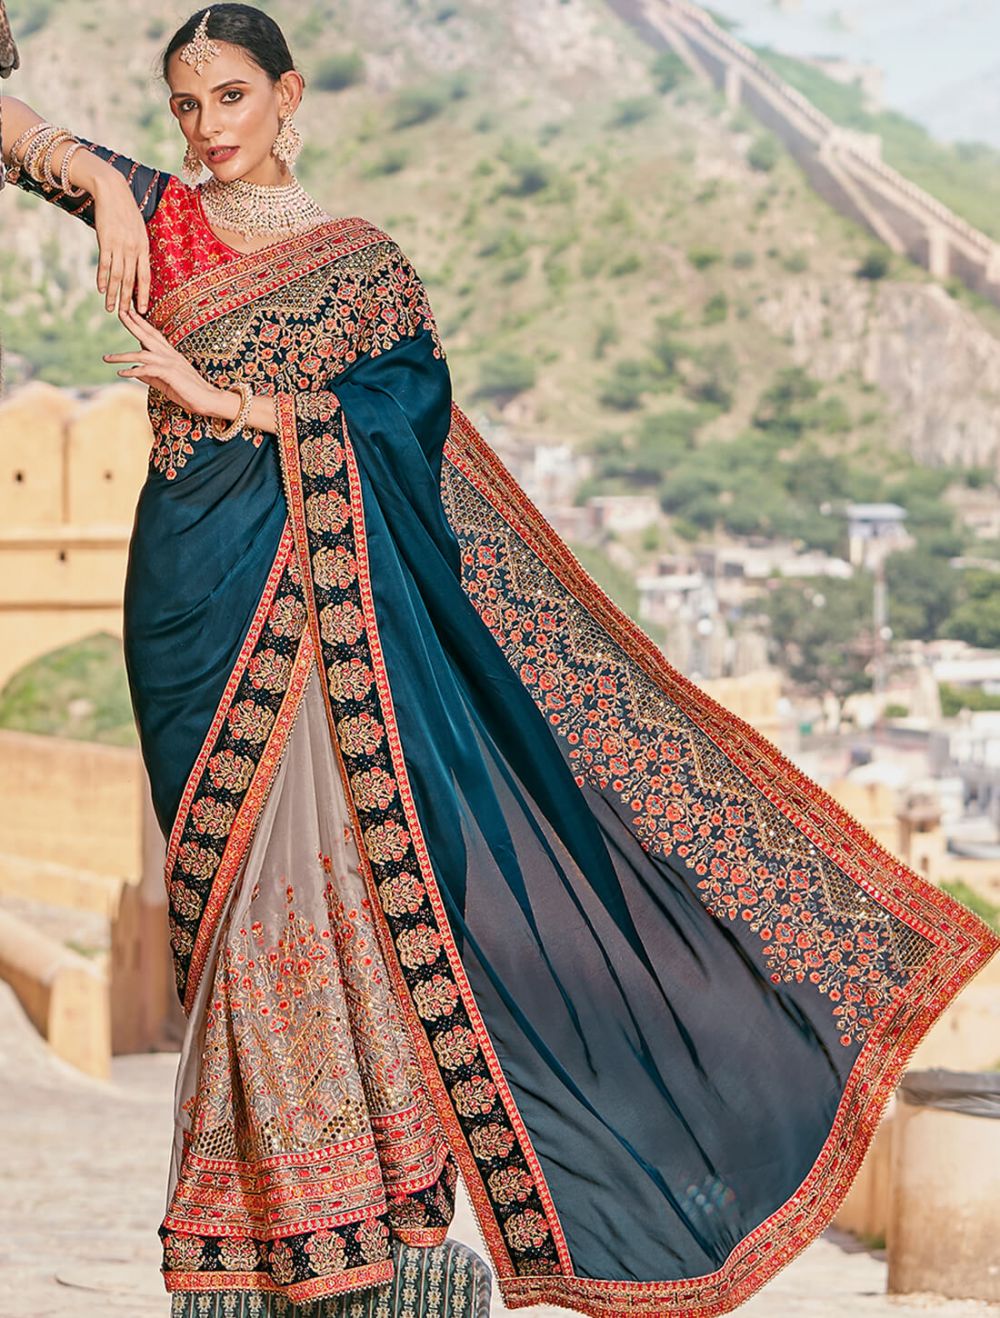 Sareeinternational Studded with 20000 Diamonds this Pretty Designer Saree  Priced just ₹2940/- plus shipping we care fo… | Fancy sarees, Bridal saree, Saree  designs